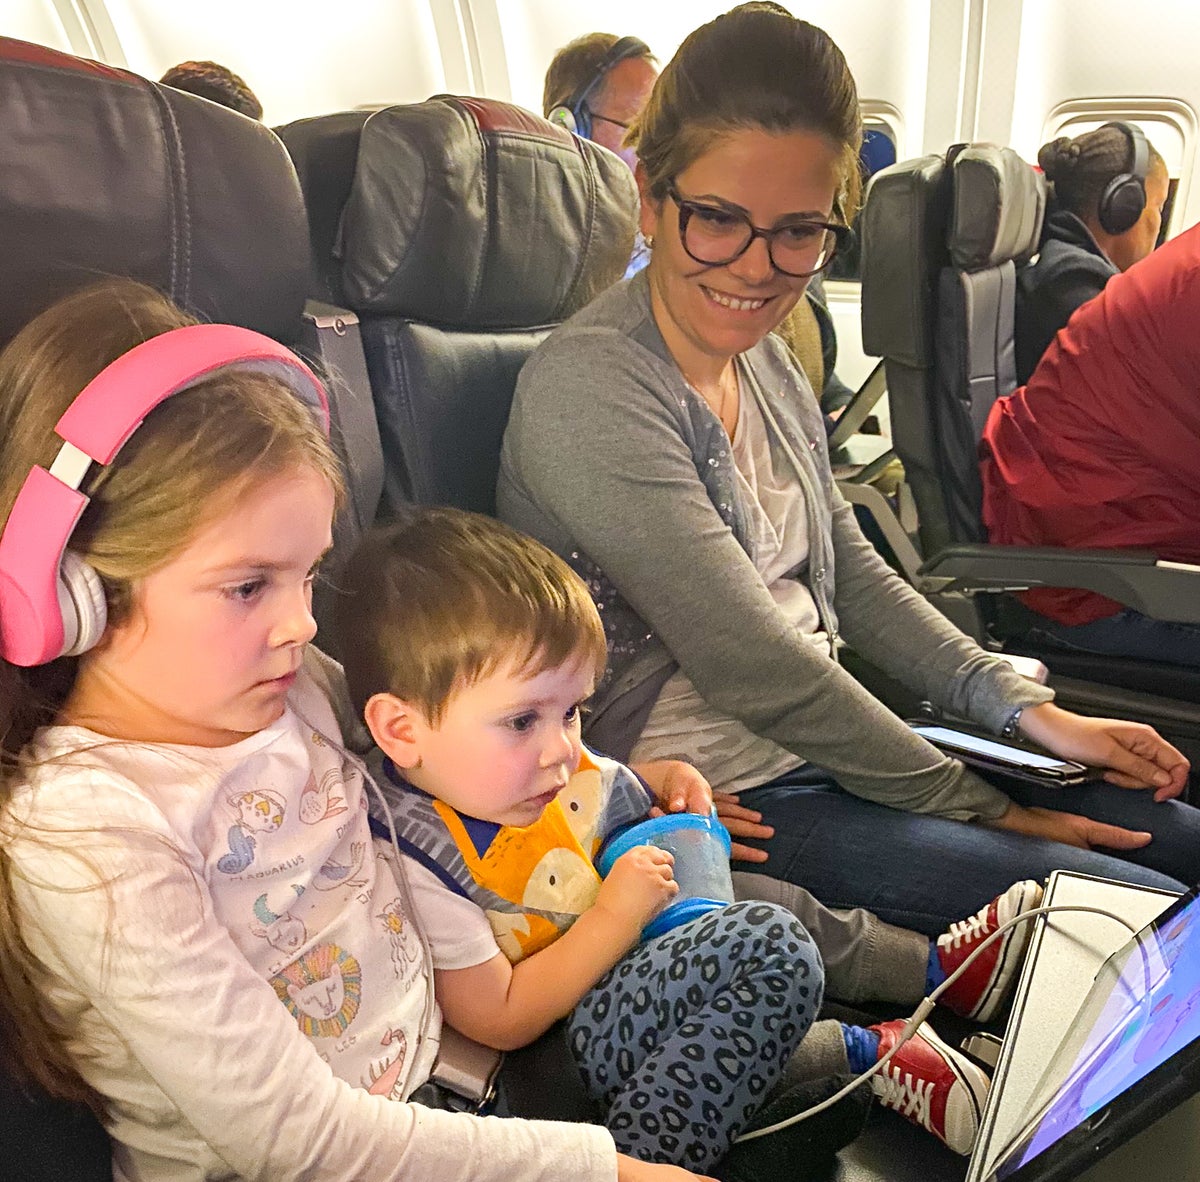 American Airlines 767 Economy Lap Child